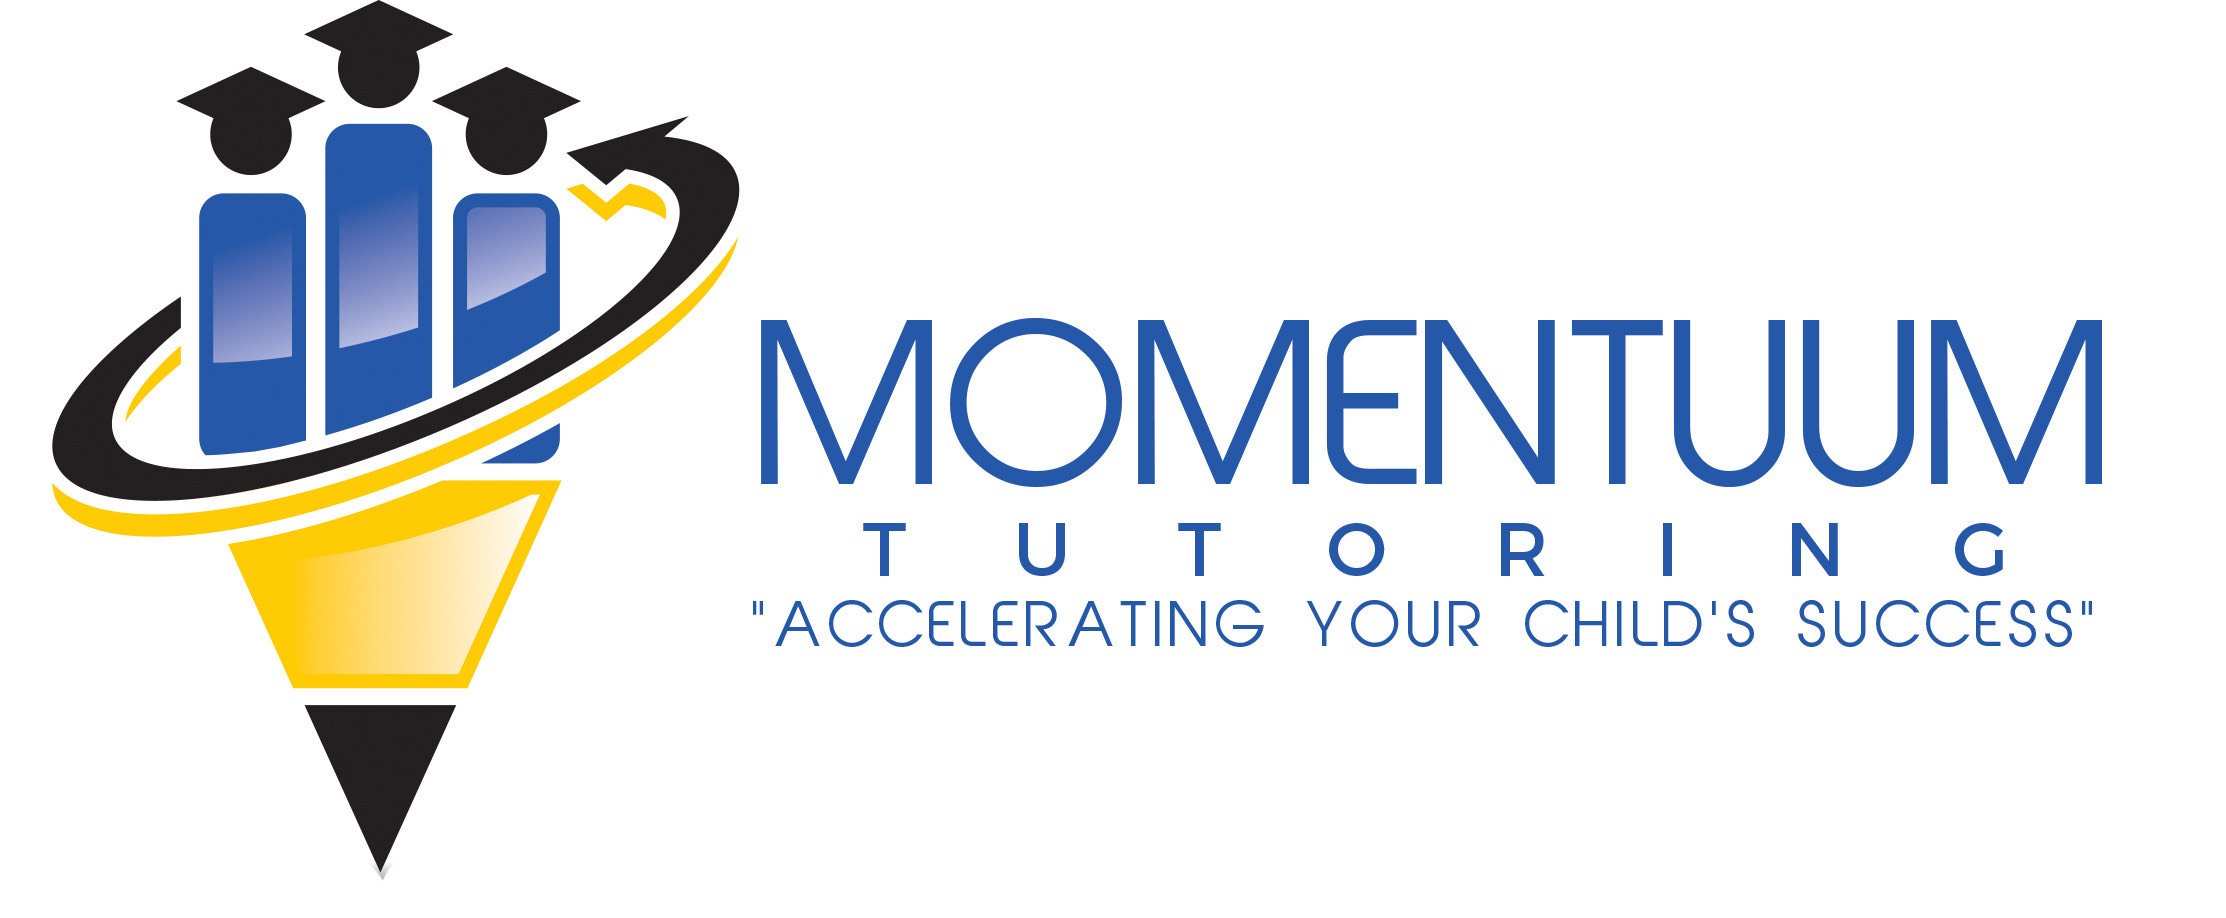 Momentuum, LLC logo